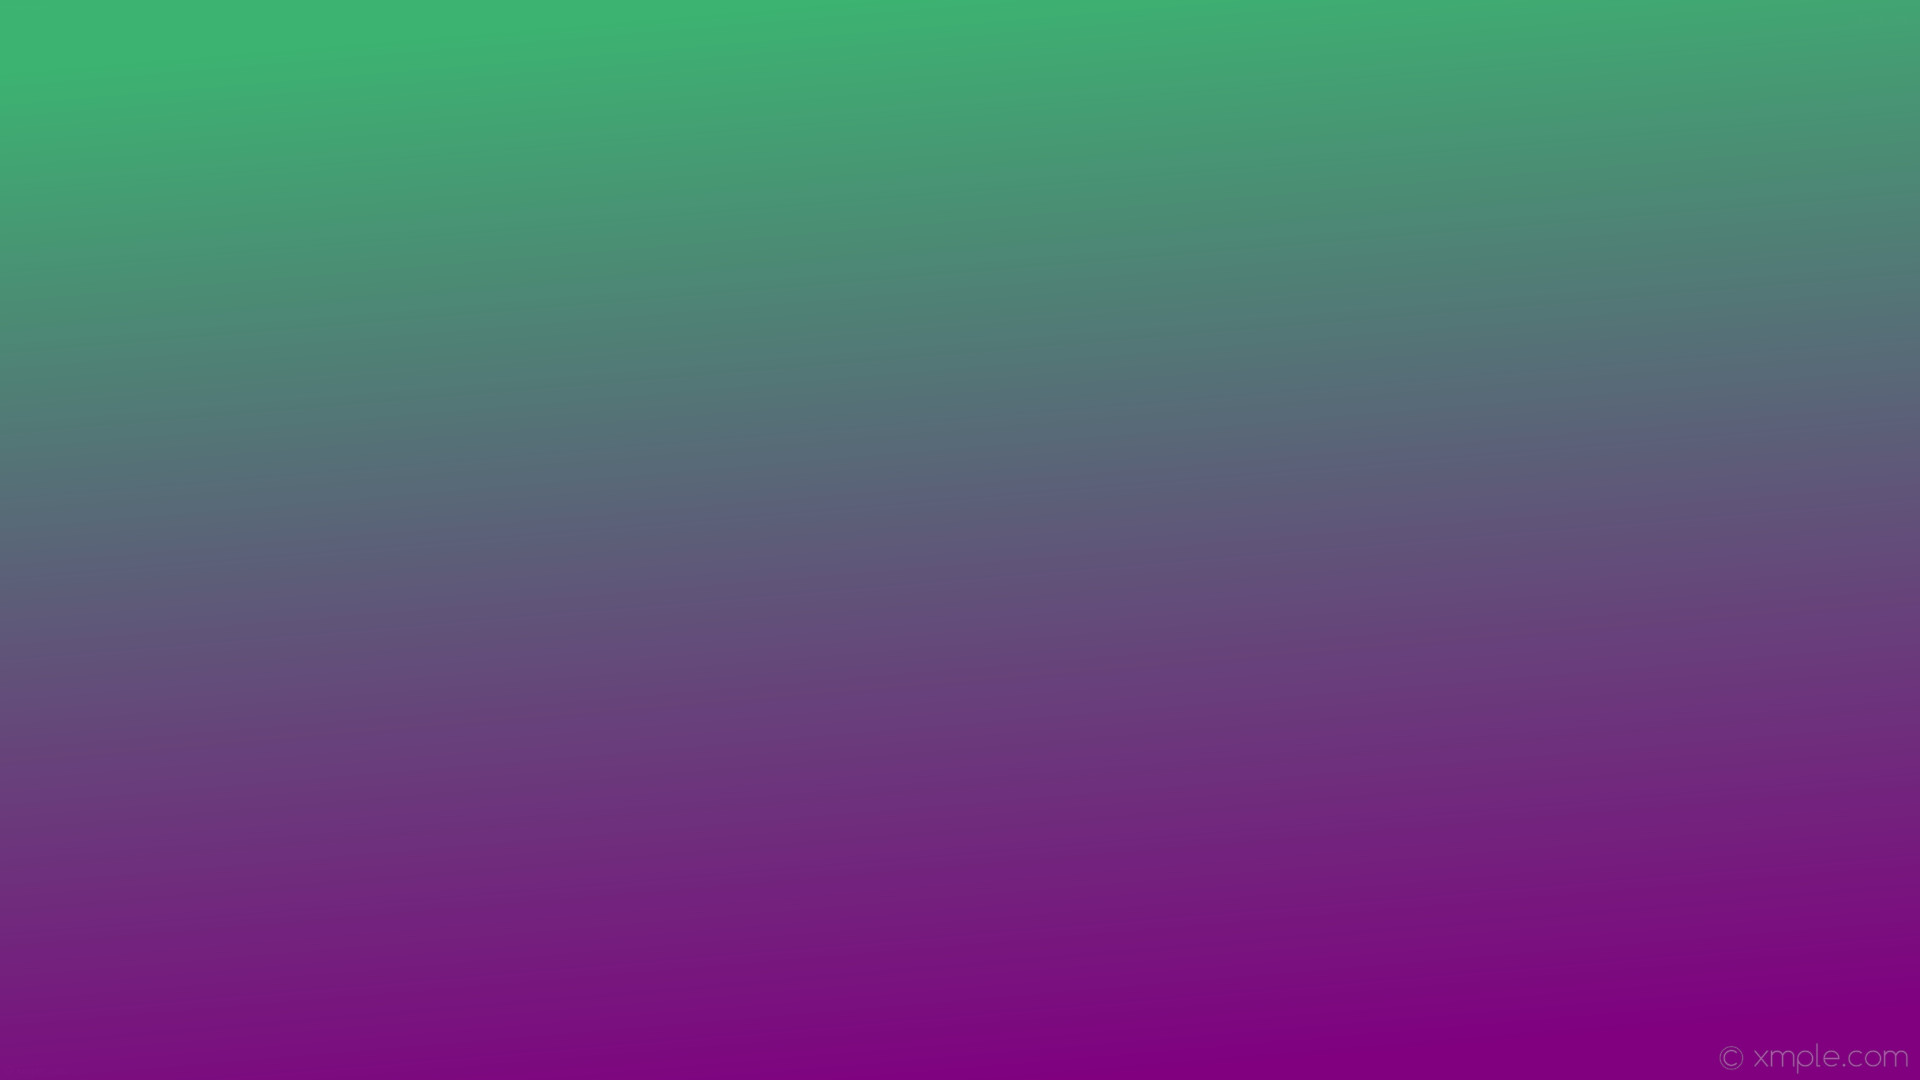 Download wallpaper 2560x1024 trees backlight neon purple green  ultrawide monitor hd background